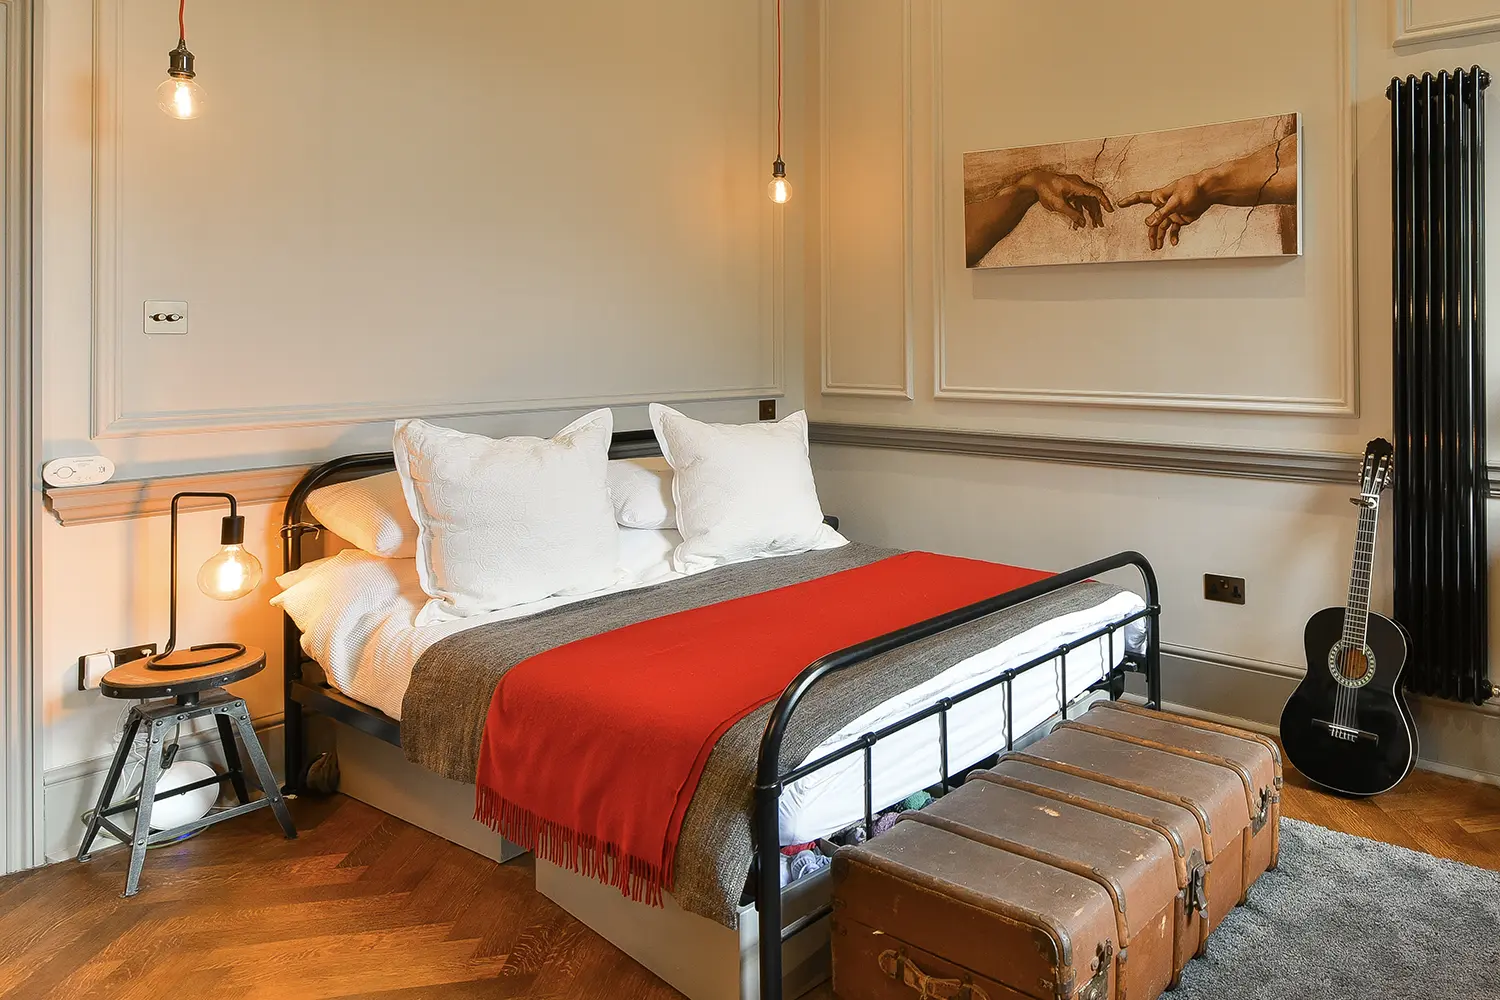 Heathfield Historic Apartment bedroom interior design